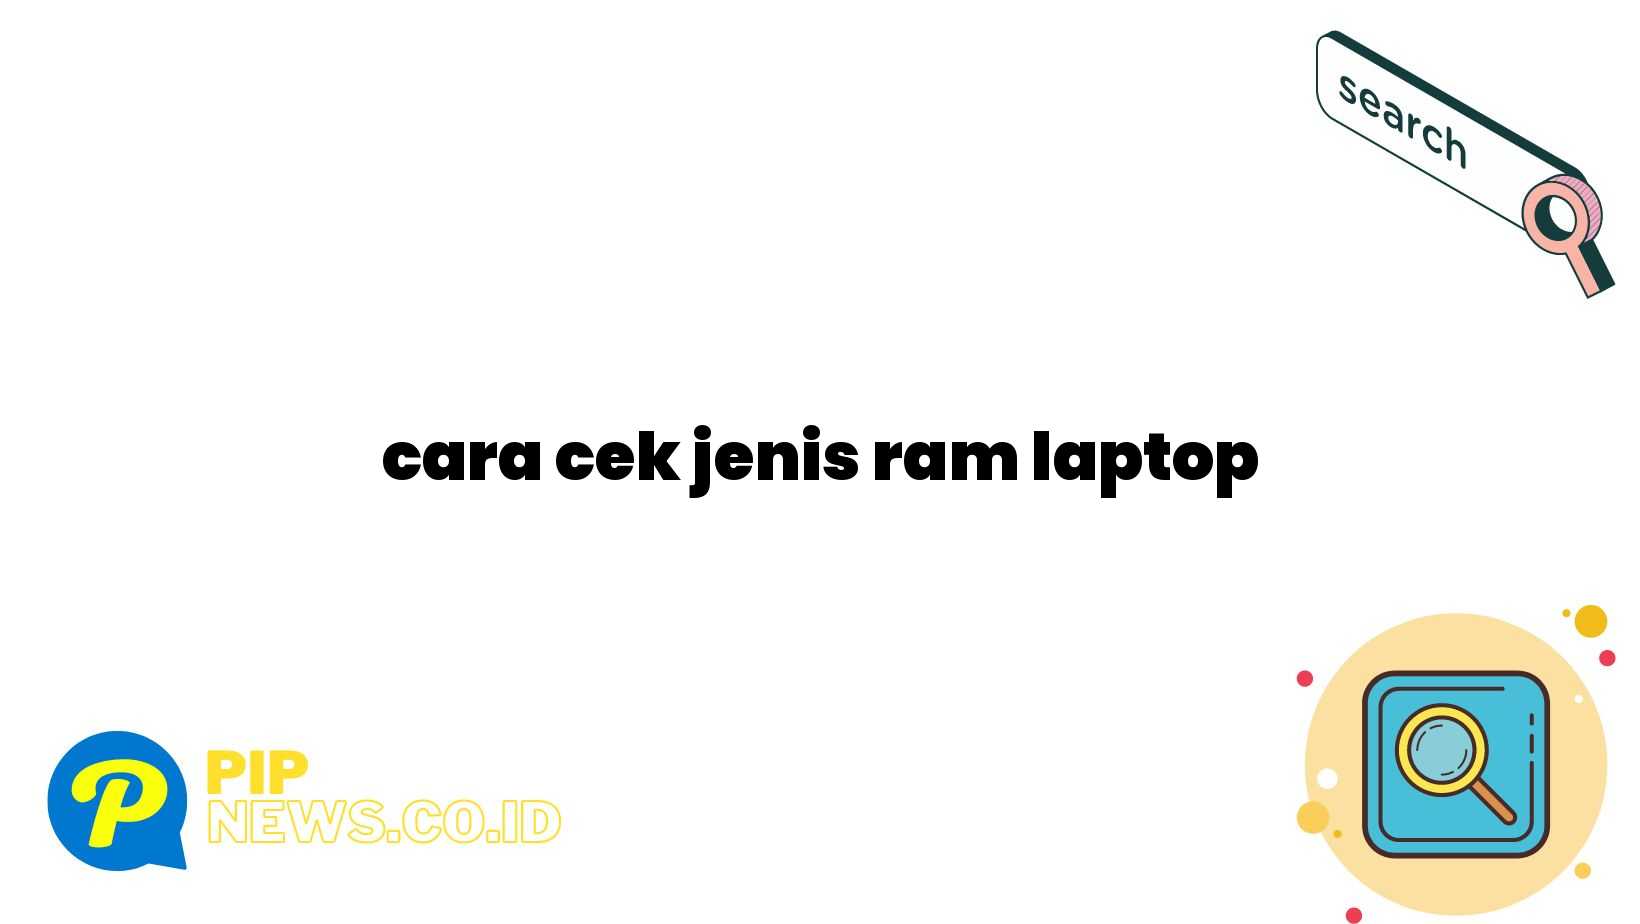 cara cek jenis ram laptop